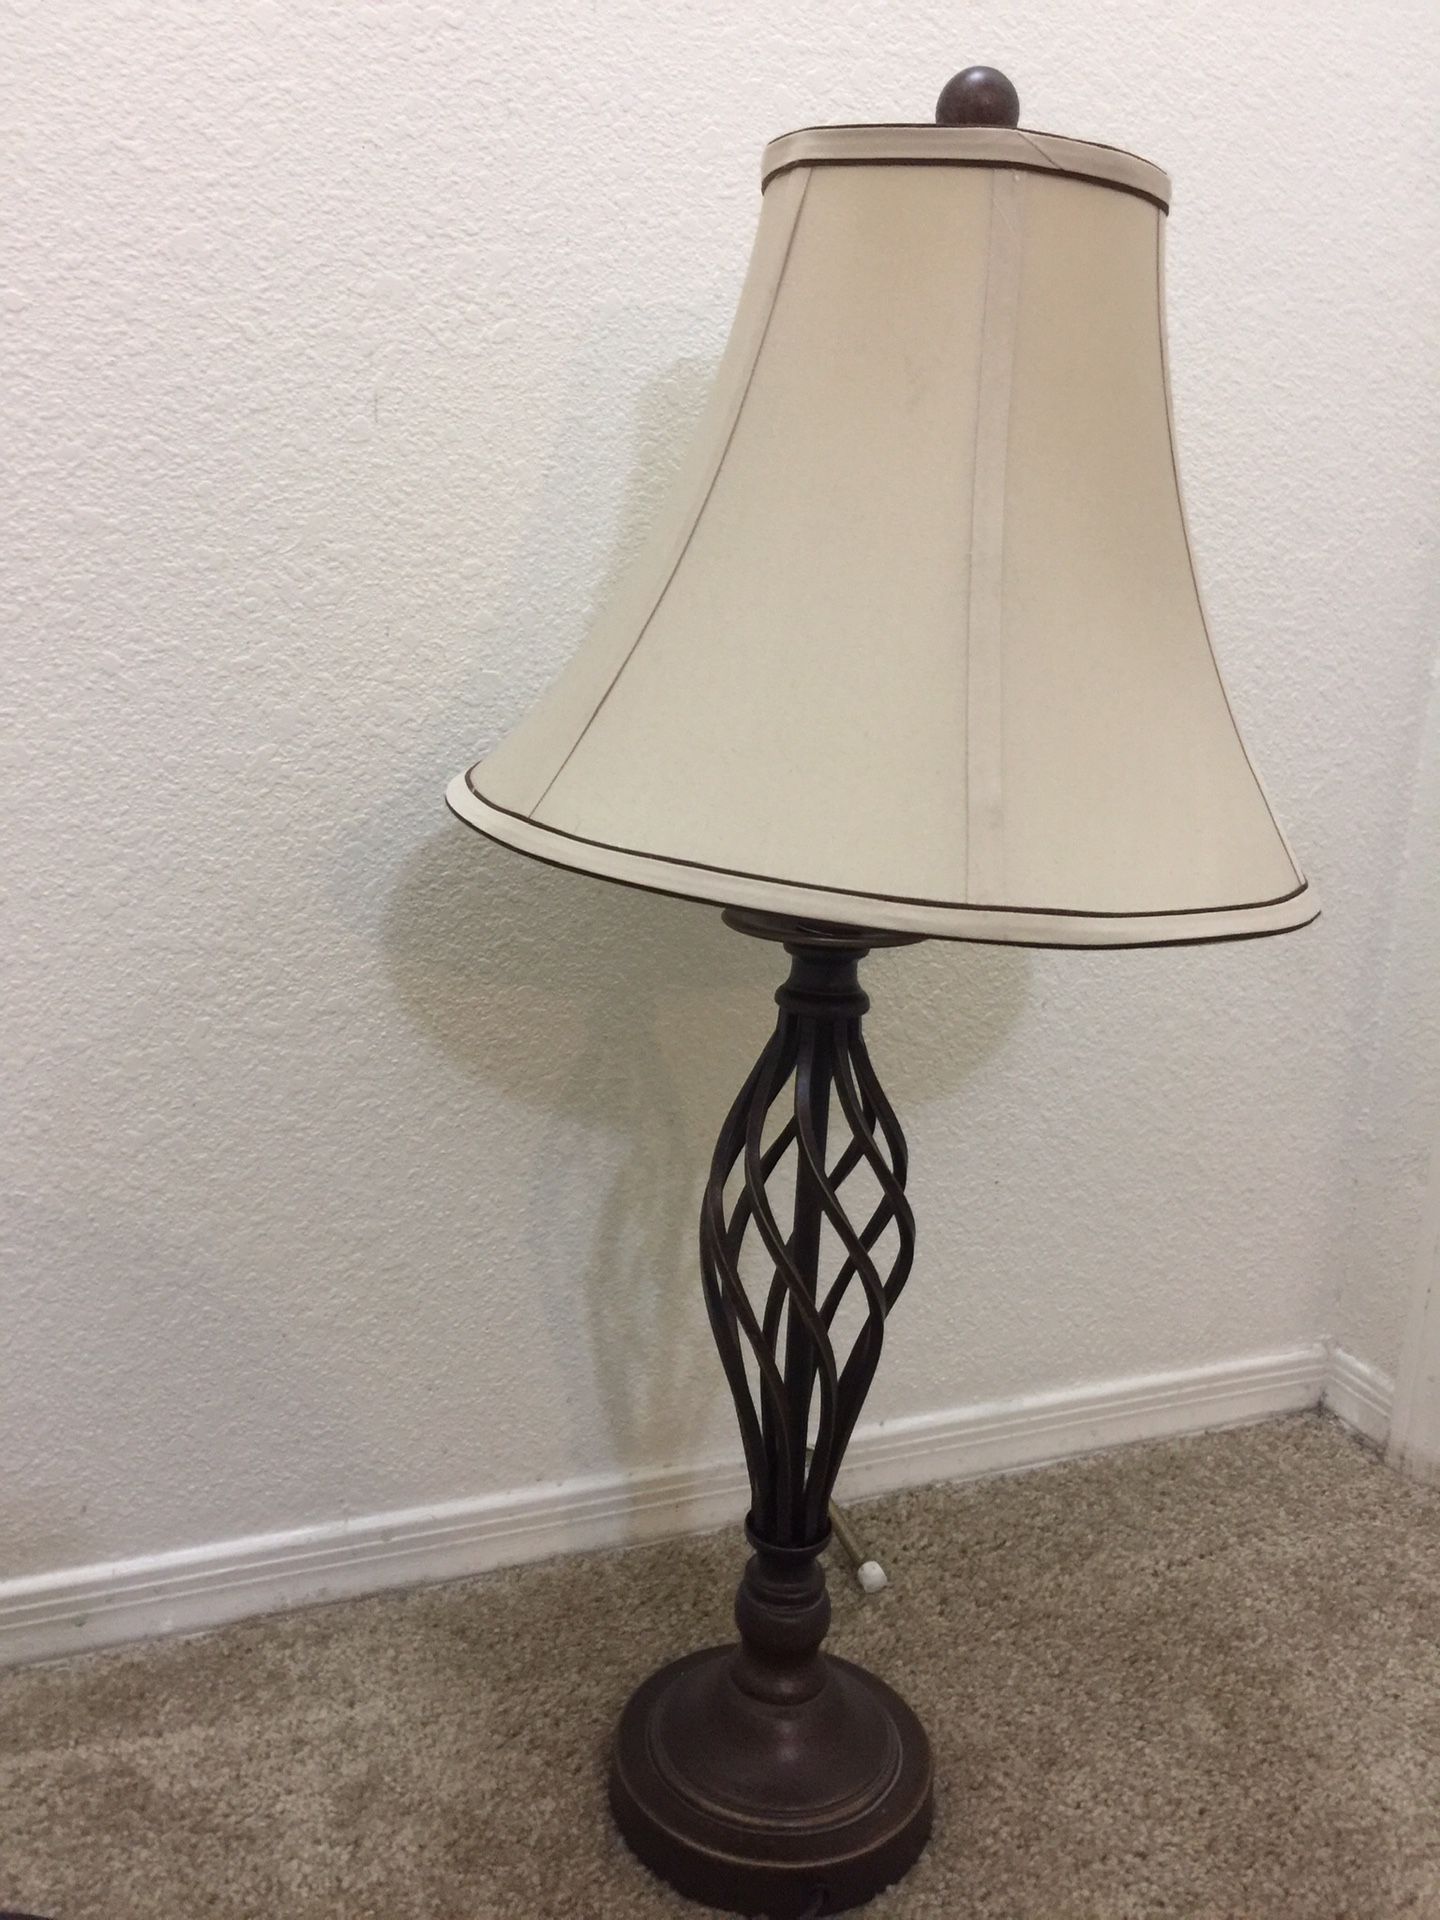 Dark Brown Metal Lamp & shade (great condition!) $10 obo